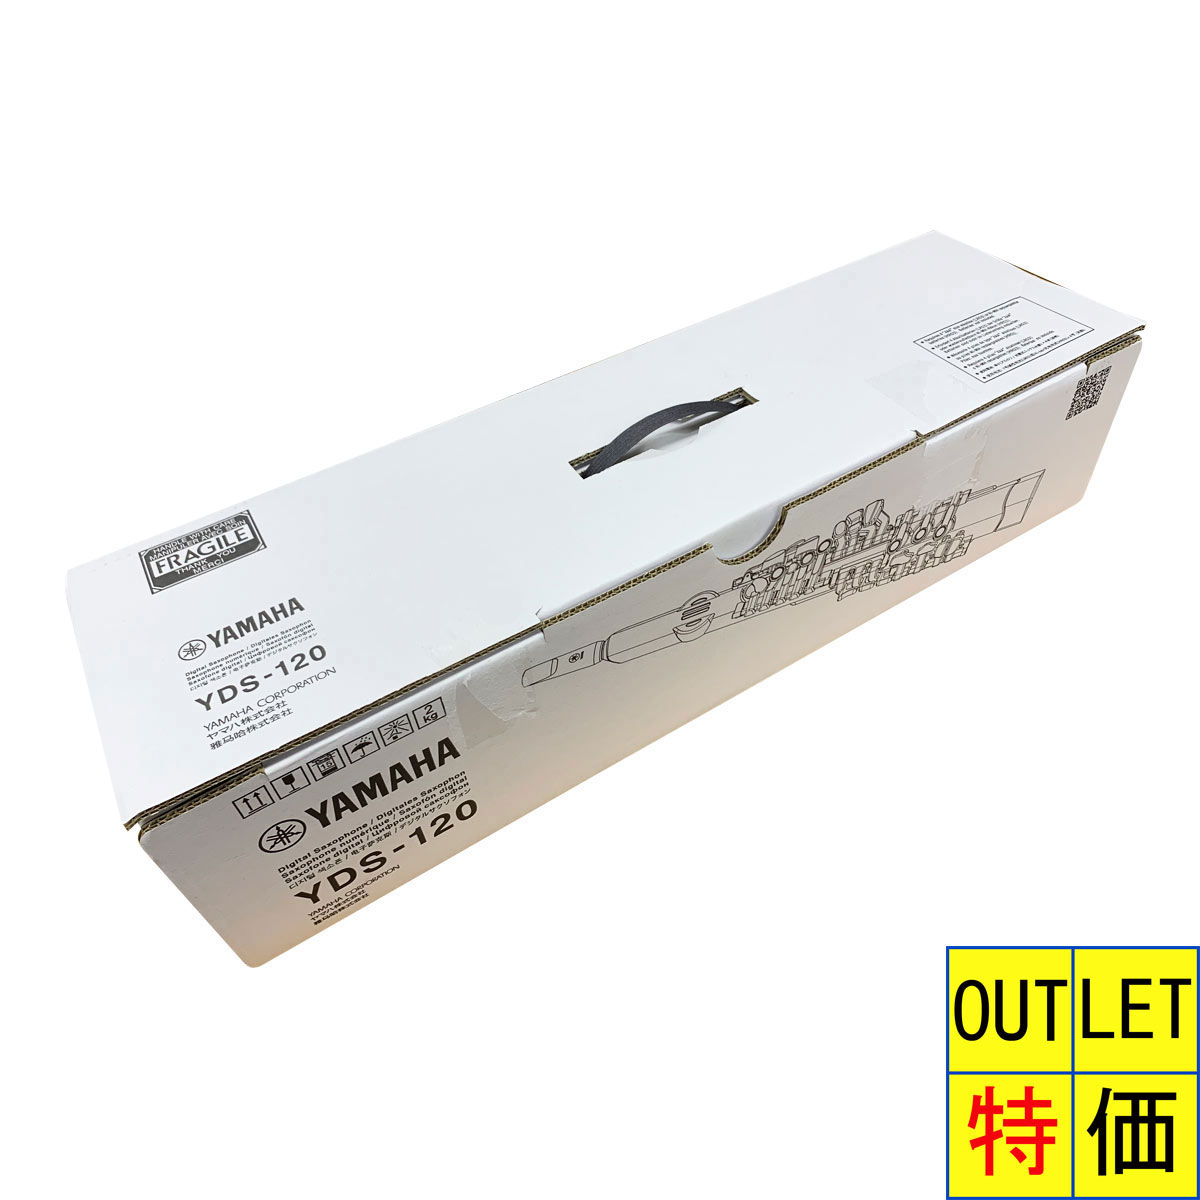 YAMAHA   YDS-120 デジタルサックス DIGITAL SAXOPHONE 専用ストラップセット